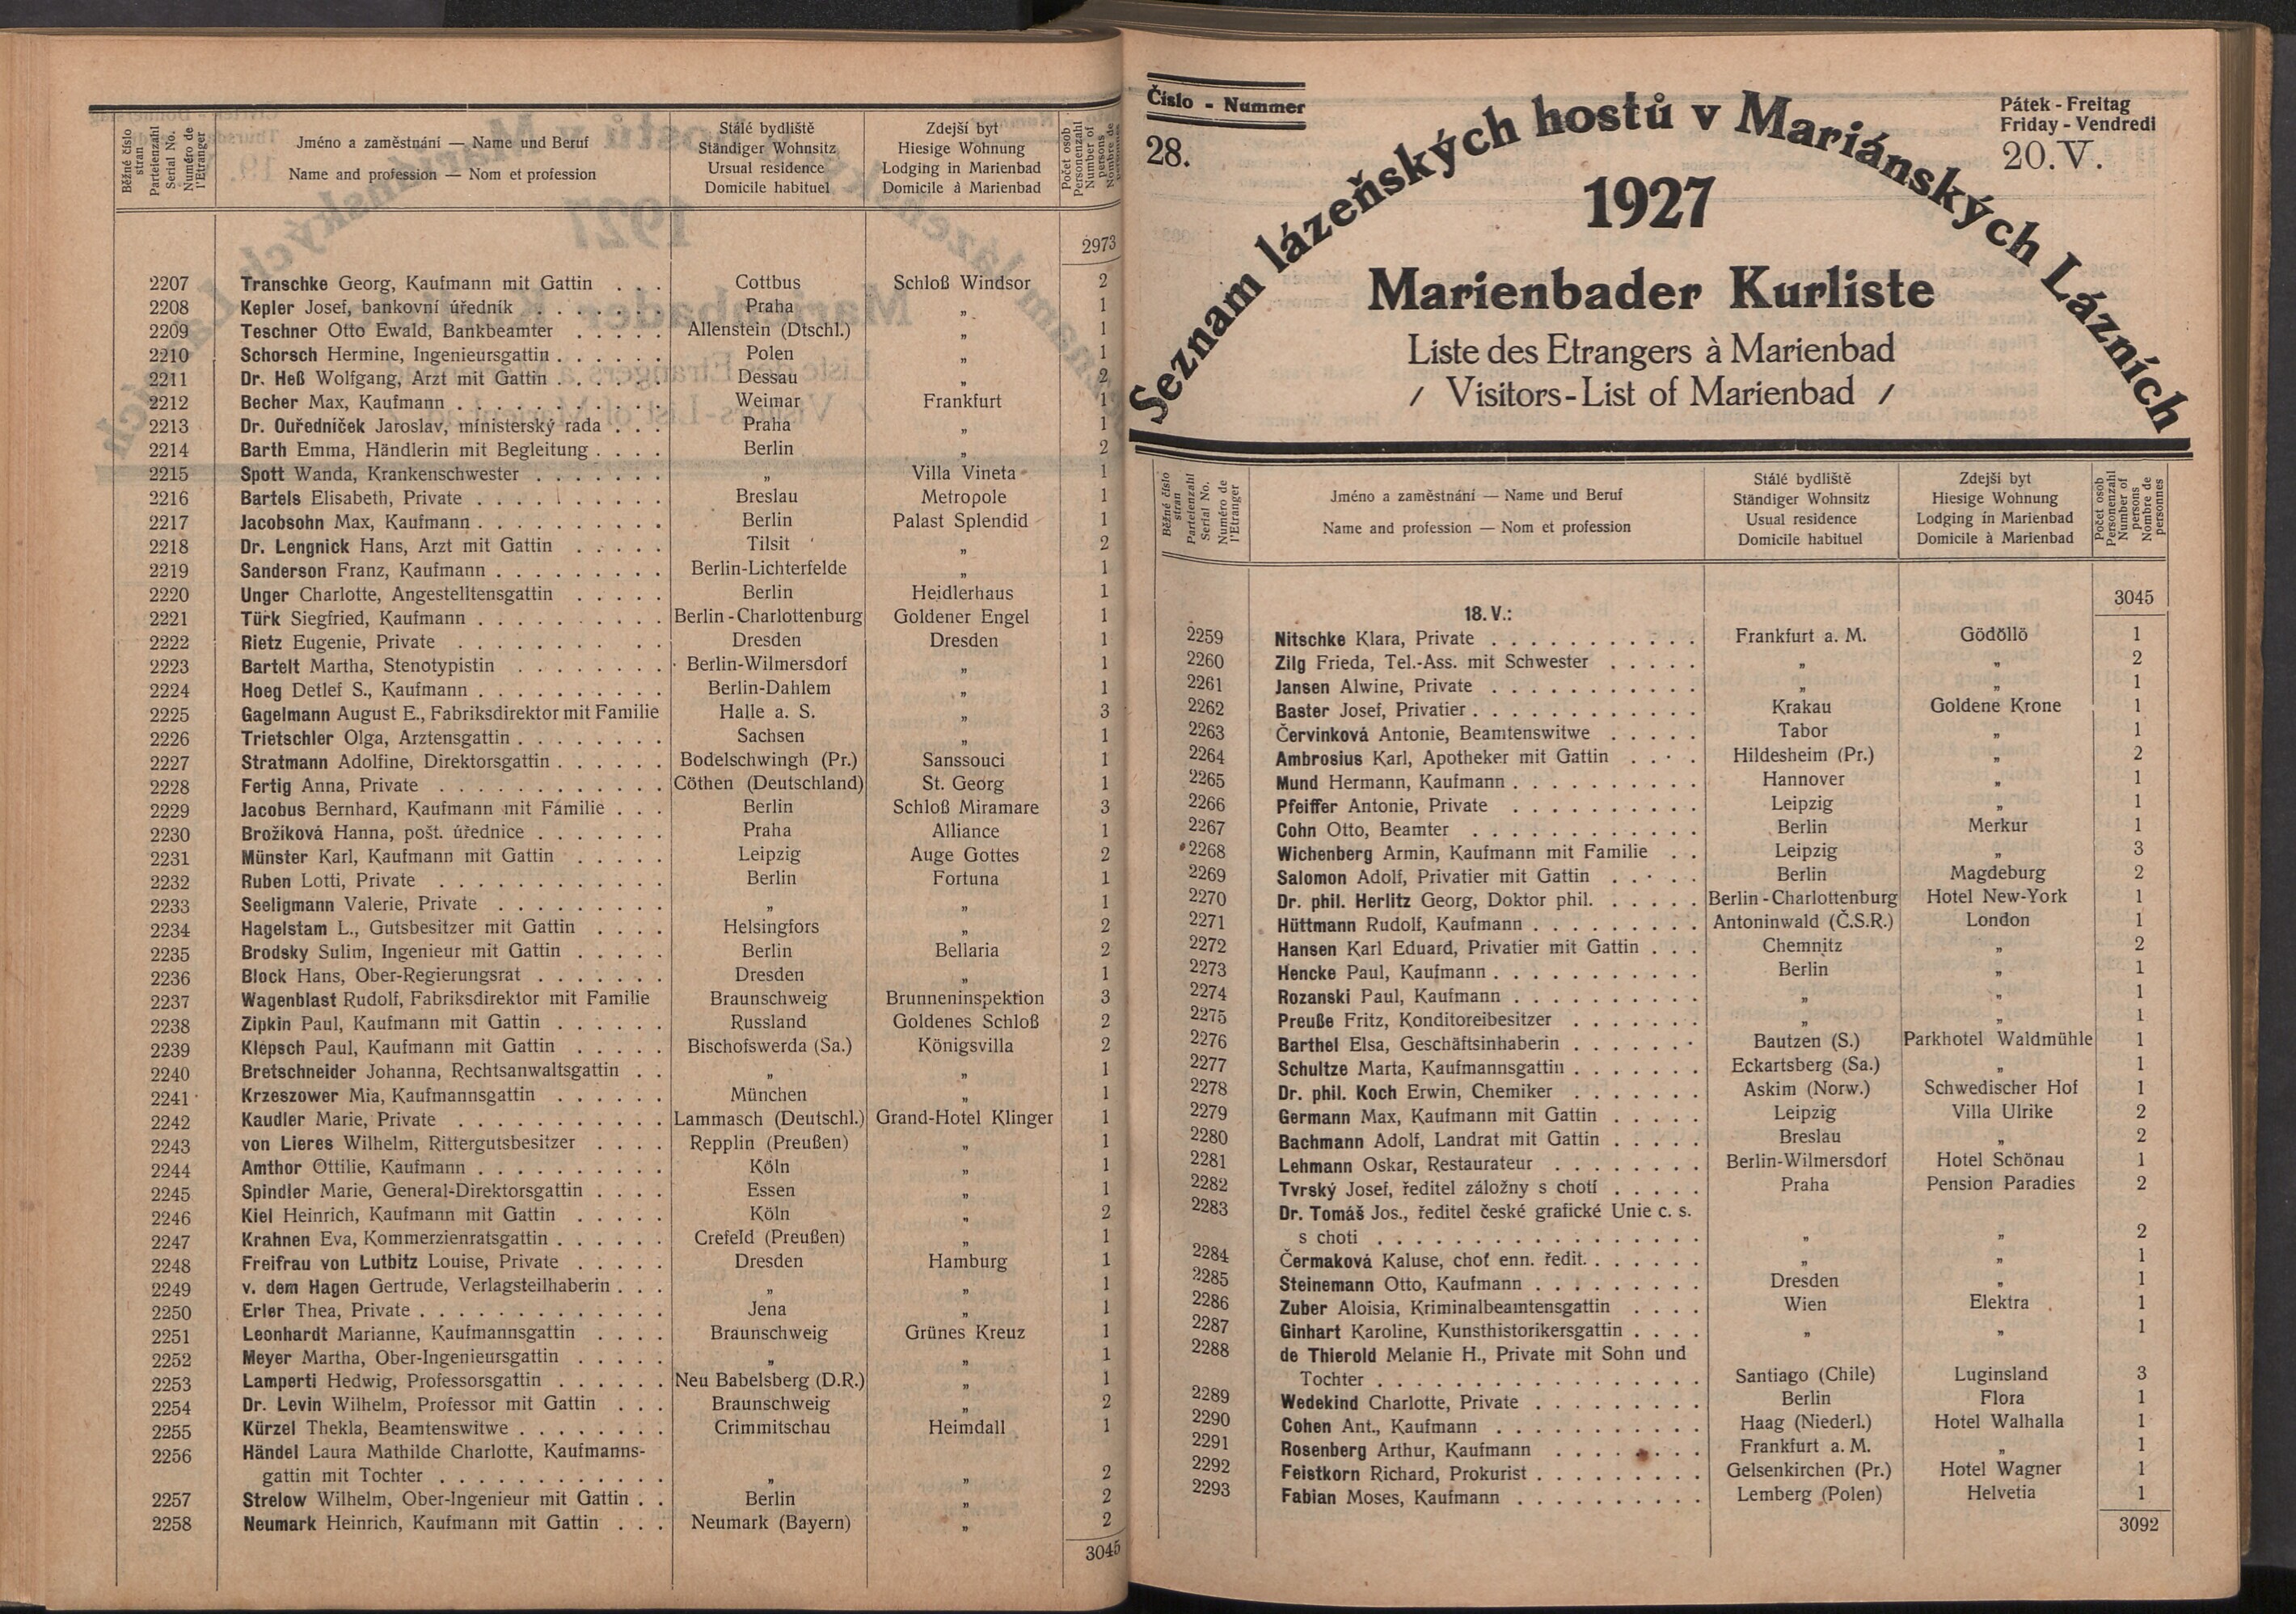 106. soap-ch_knihovna_marienbader-kurliste-1927_1060